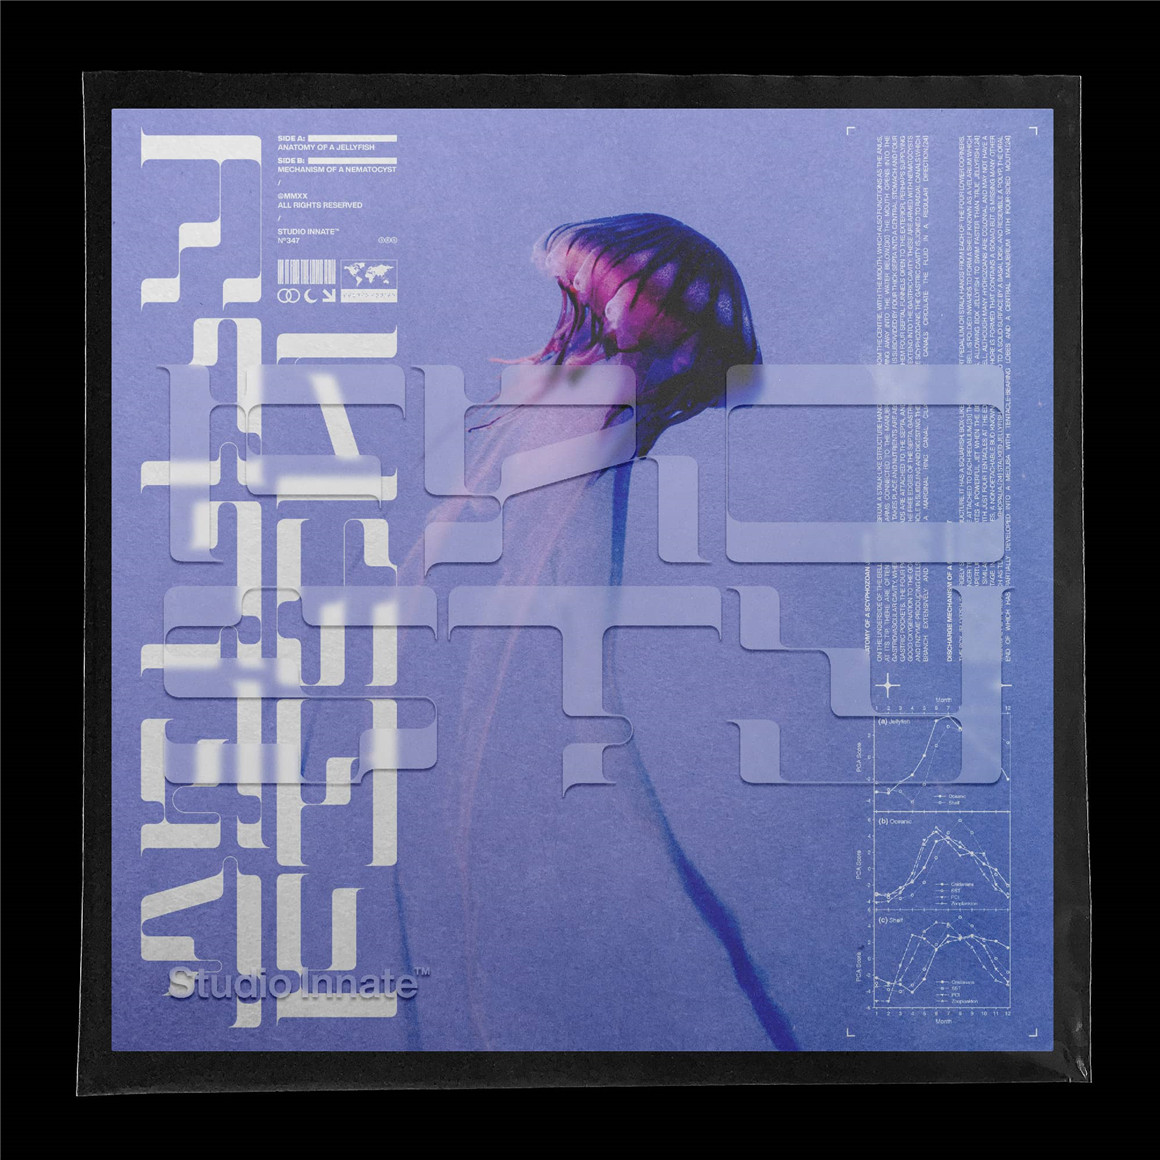 Studio Innate 潮流磨砂音乐专辑CD光盘包装纸袋贴纸设计展示贴图样机模板素材 Frosted Disc 样机素材 第2张